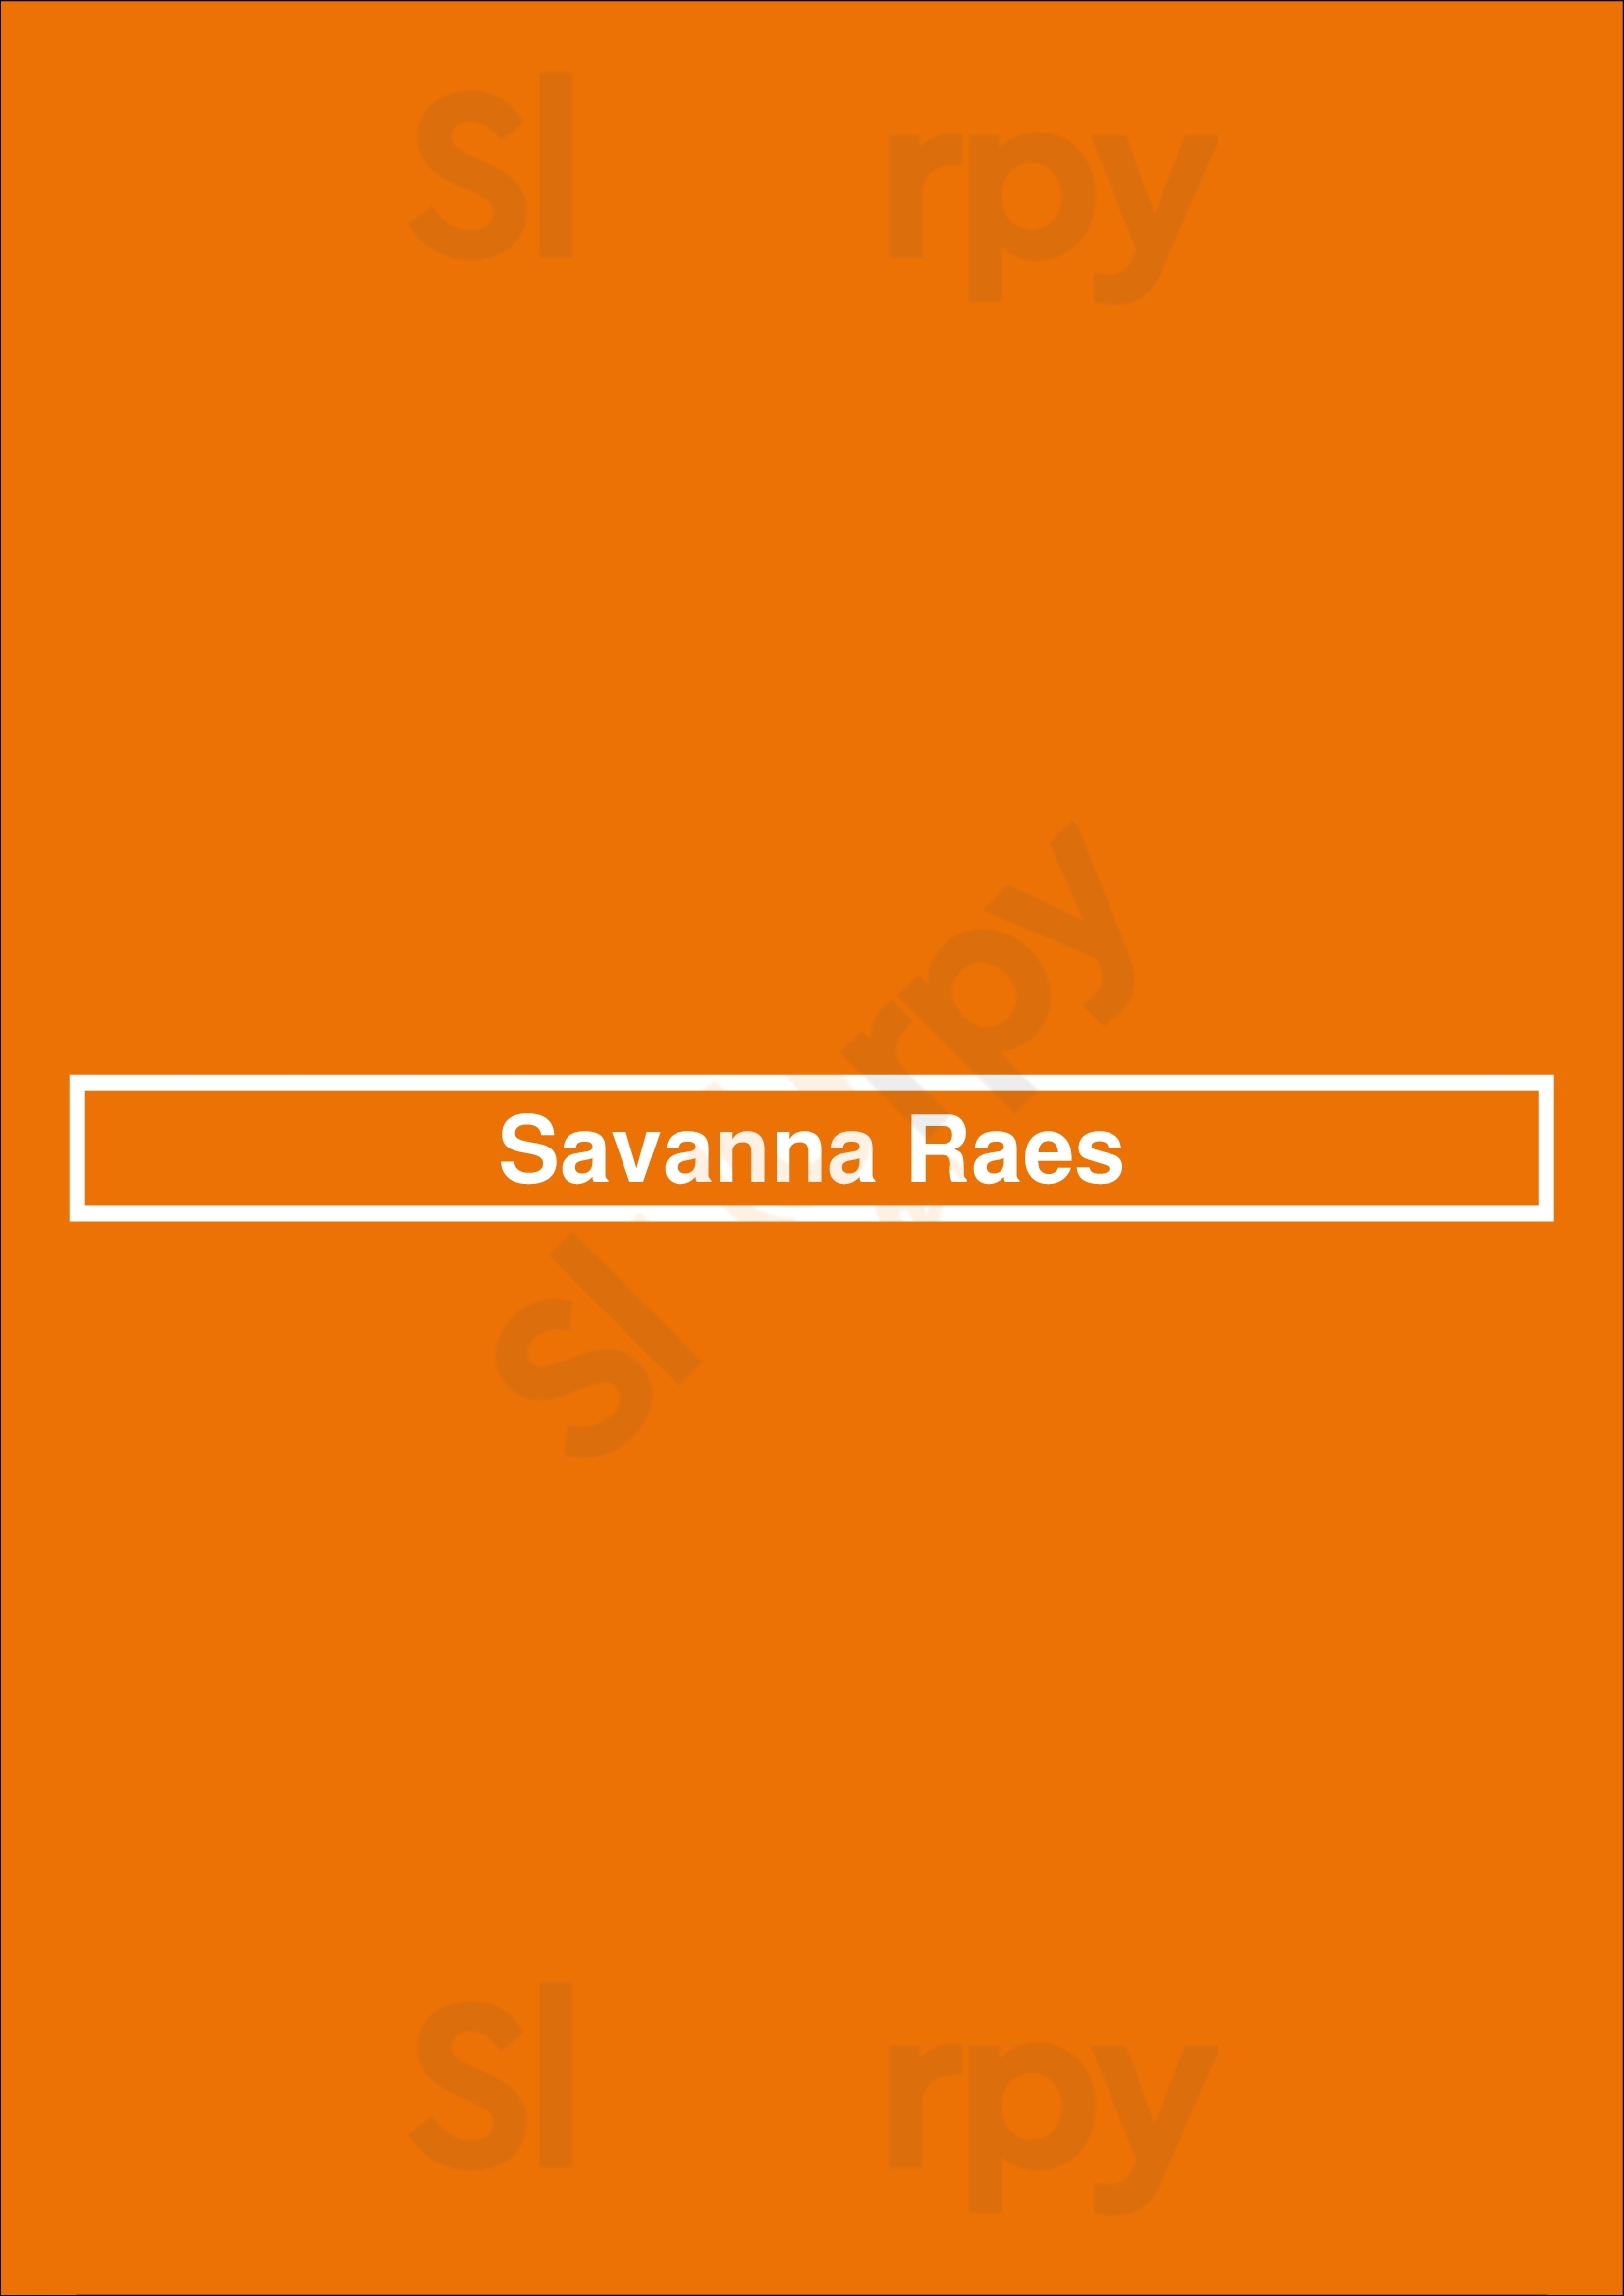 Savanna Raes New York City Menu - 1